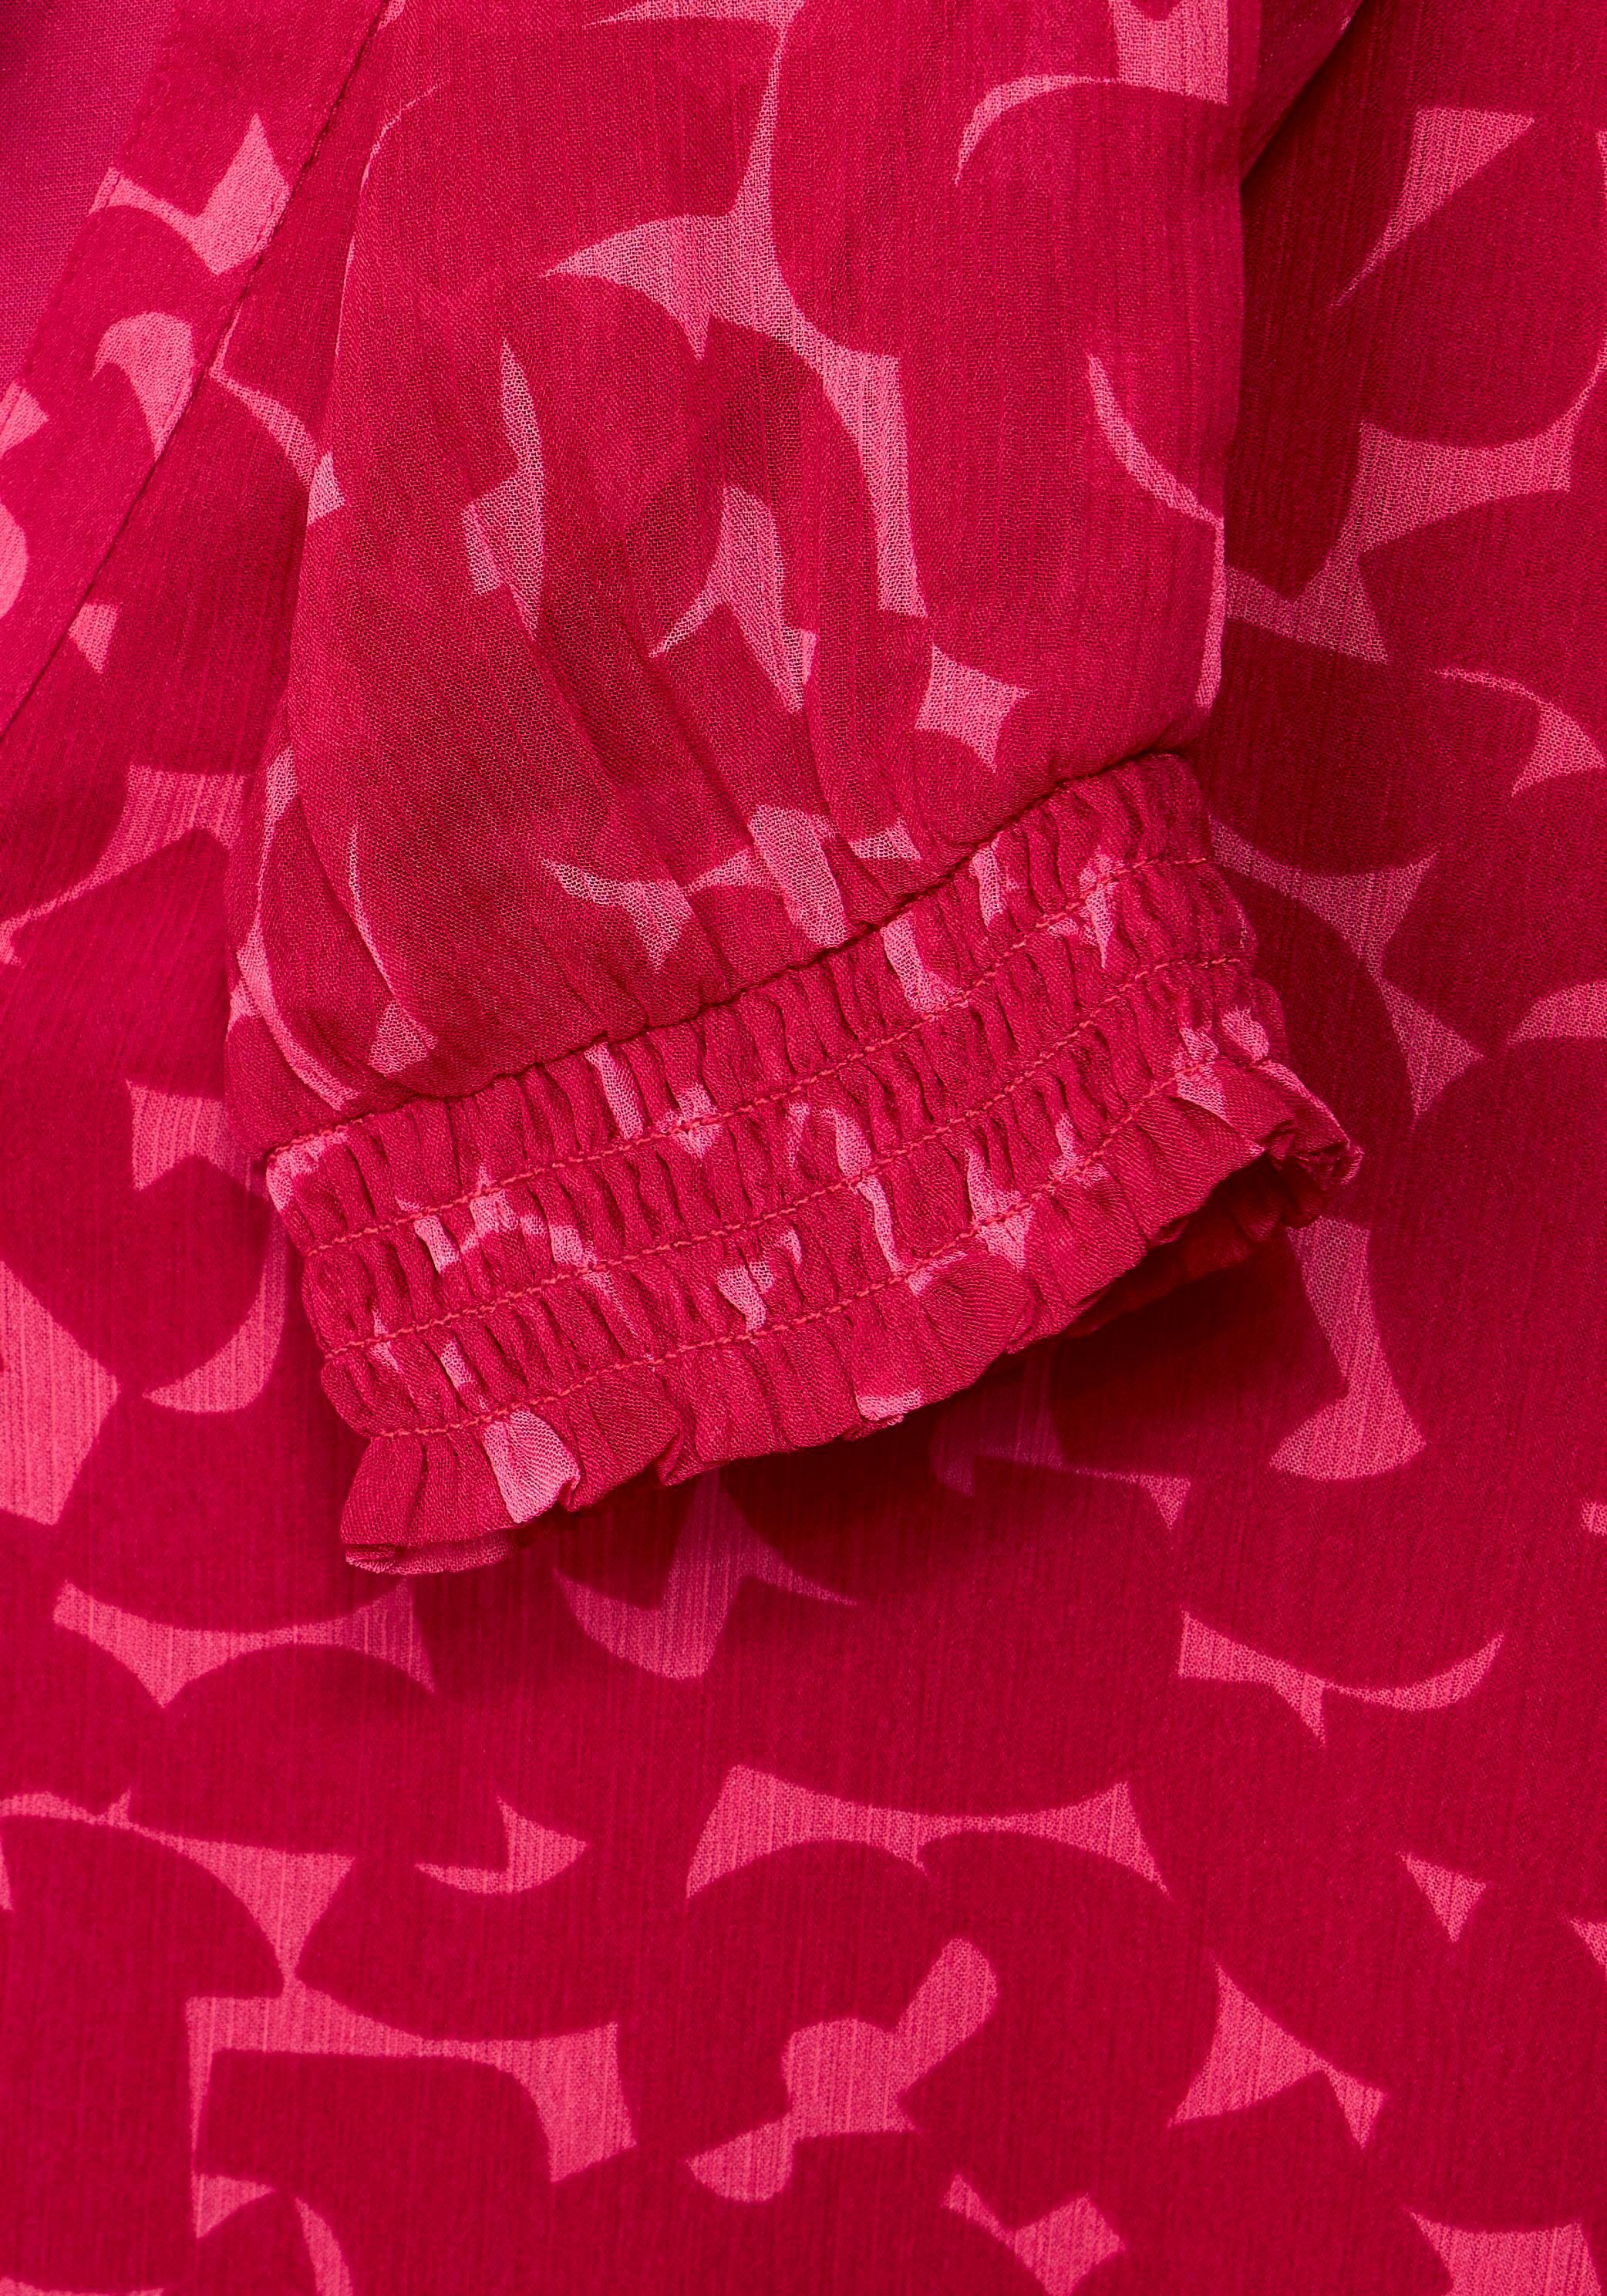 STREET ONE Chiffon pink Dress mit Tunic Allover-Print Chiffonkleid